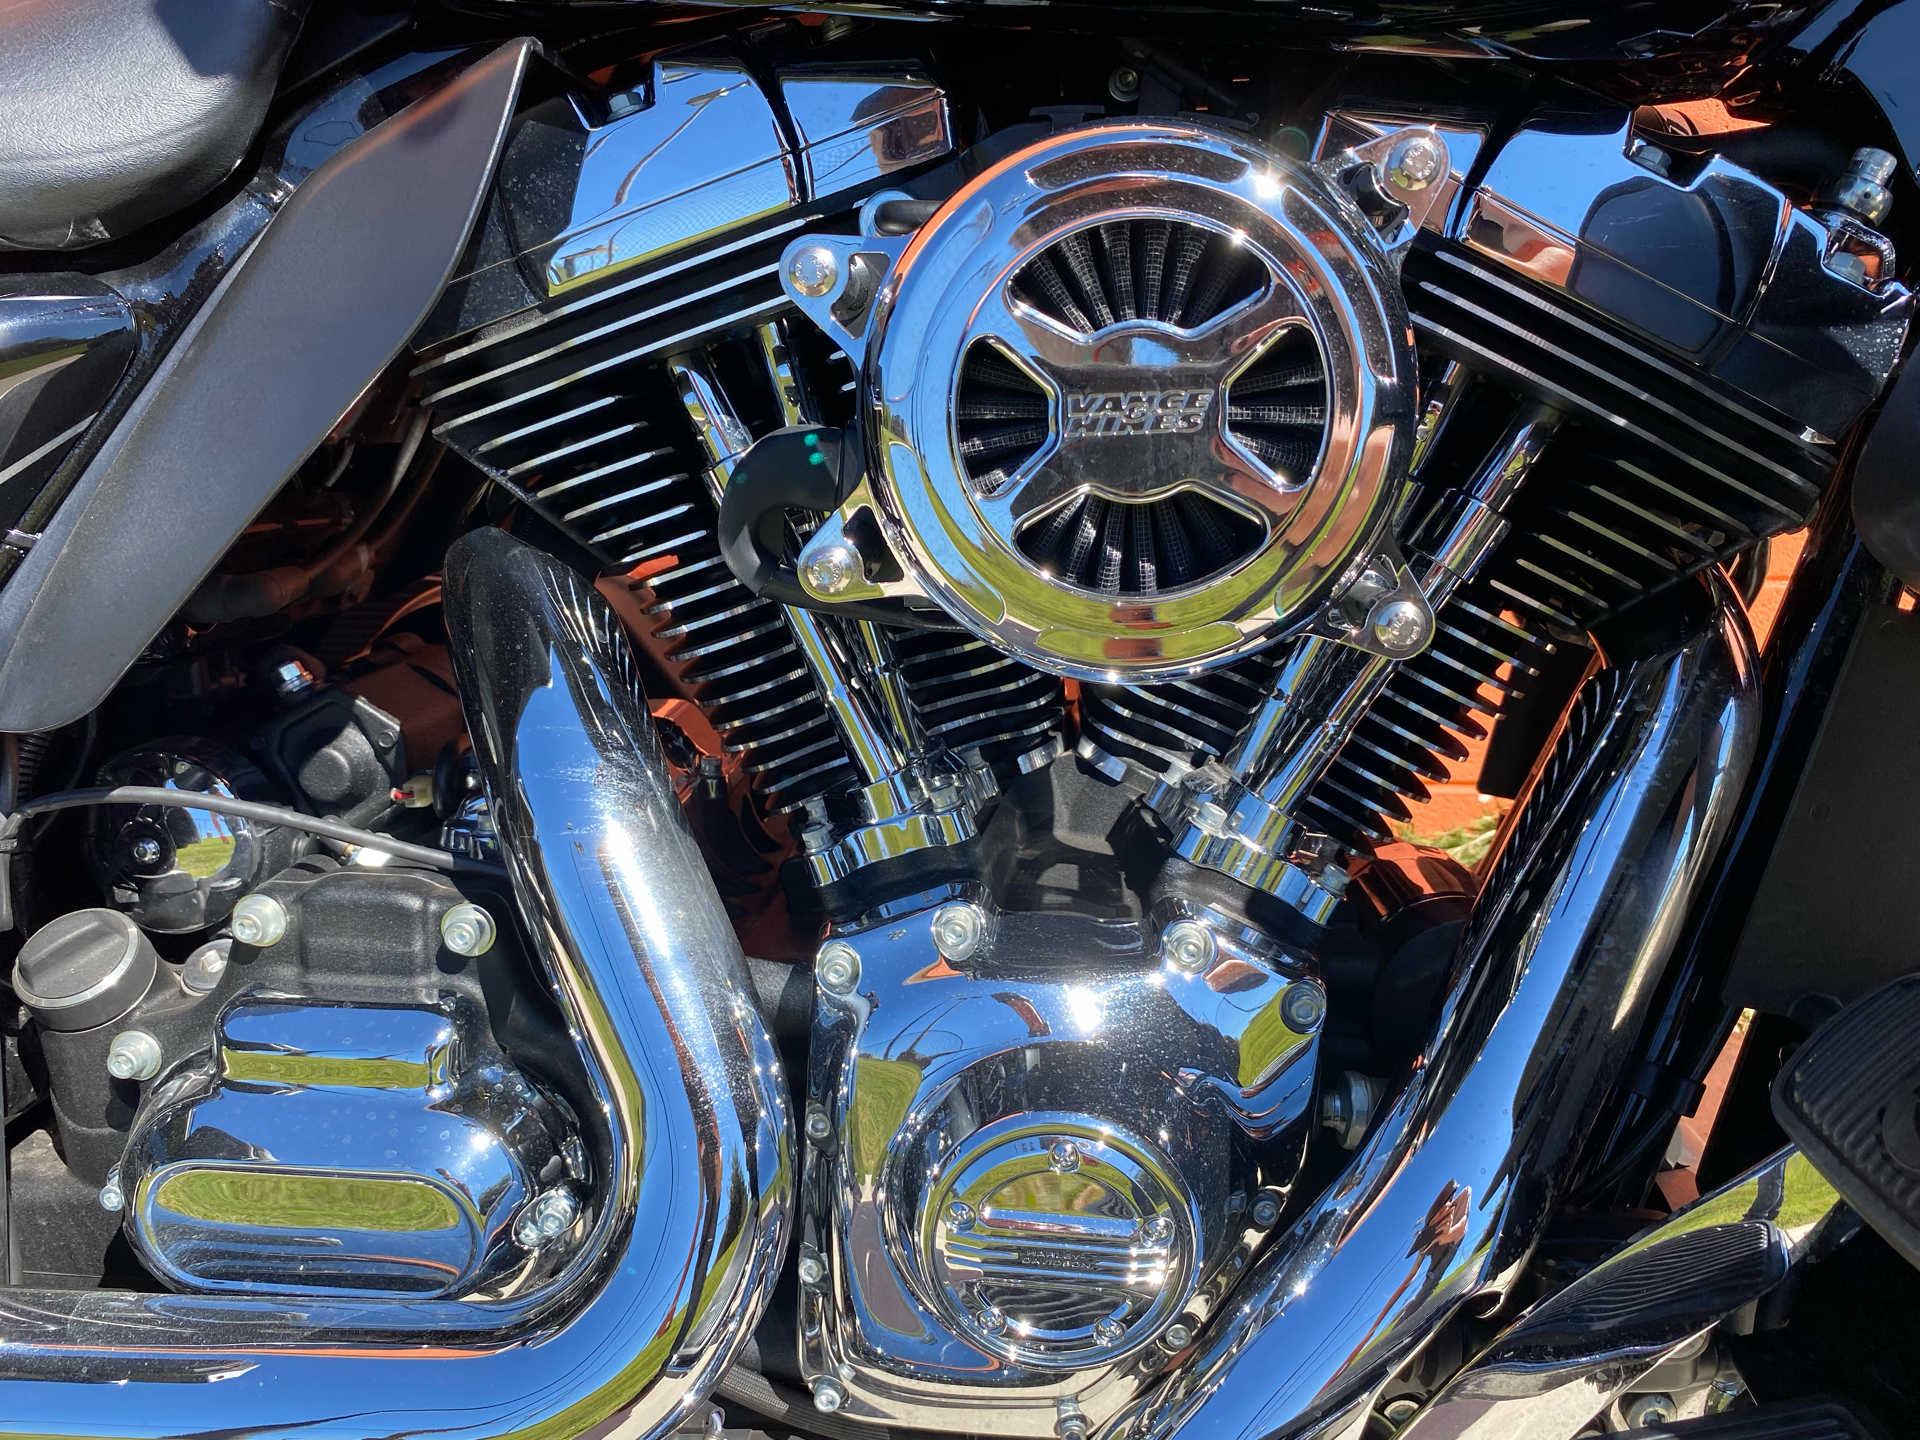 2016 Harley-Davidson Electra Glide® Ultra Classic® in Fredericksburg, Virginia - Photo 9